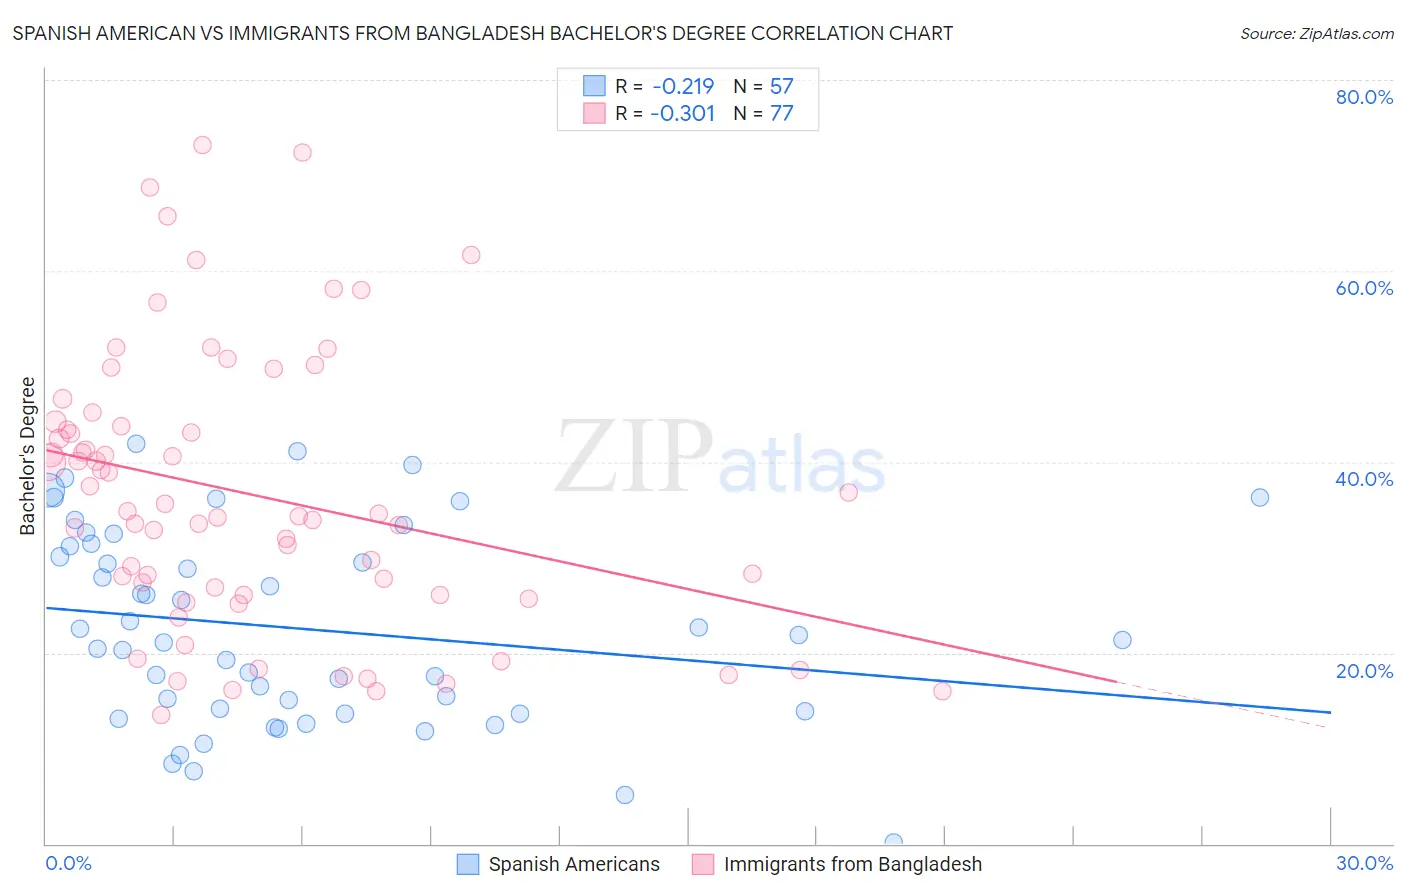 Spanish American vs Immigrants from Bangladesh Bachelor's Degree